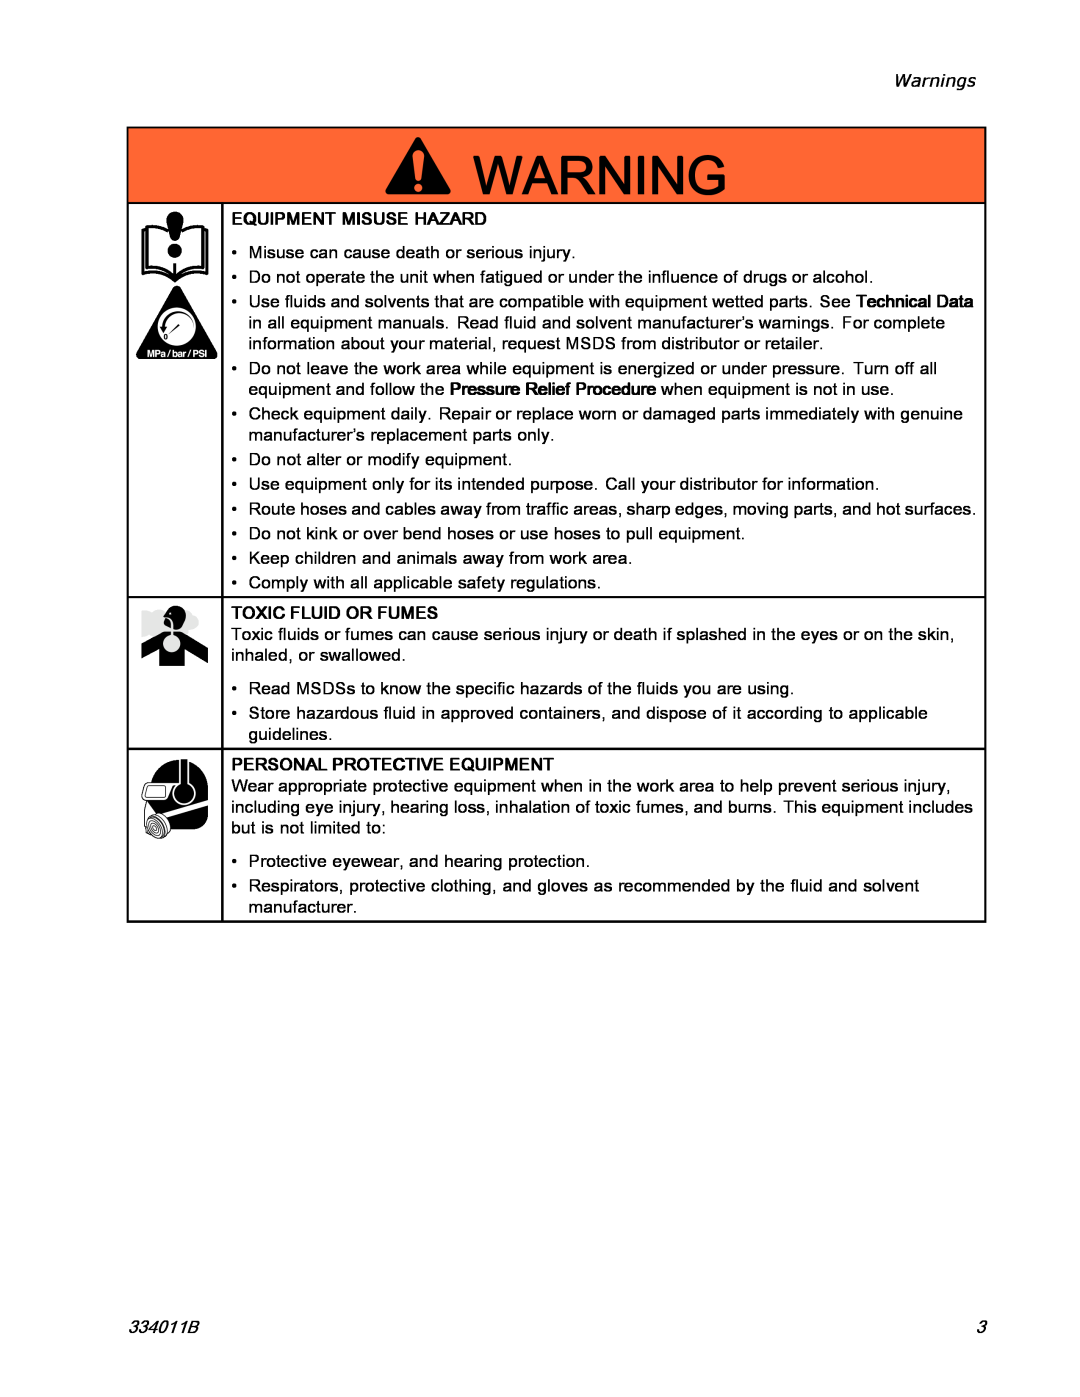 Graco 334011B Warnings, Equipment Misuse Hazard, Toxic Fluid Or Fumes, Personal Protective Equipment 